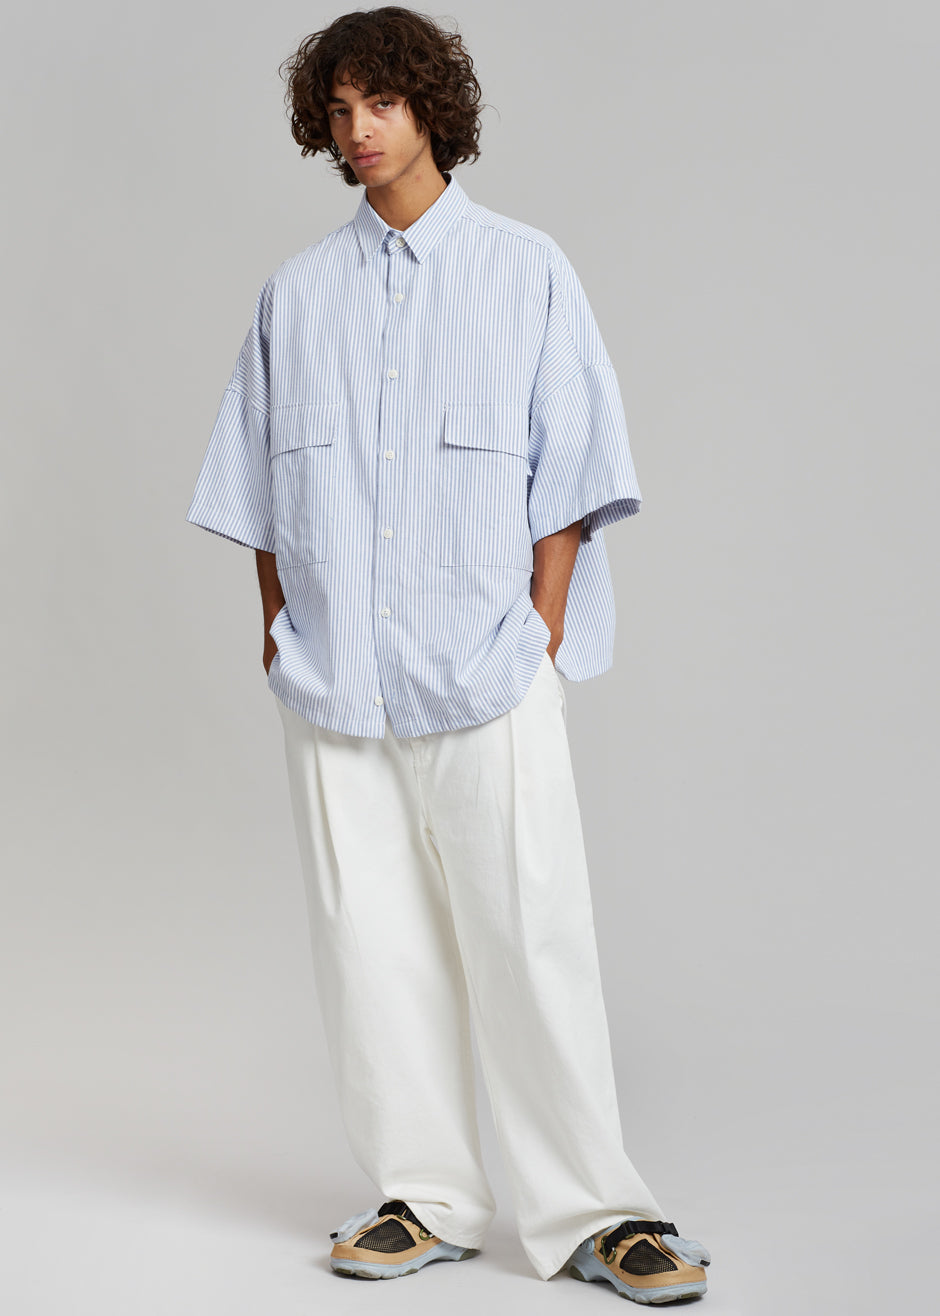 Ethan Pocket Shirt - Blue Stripe - 6